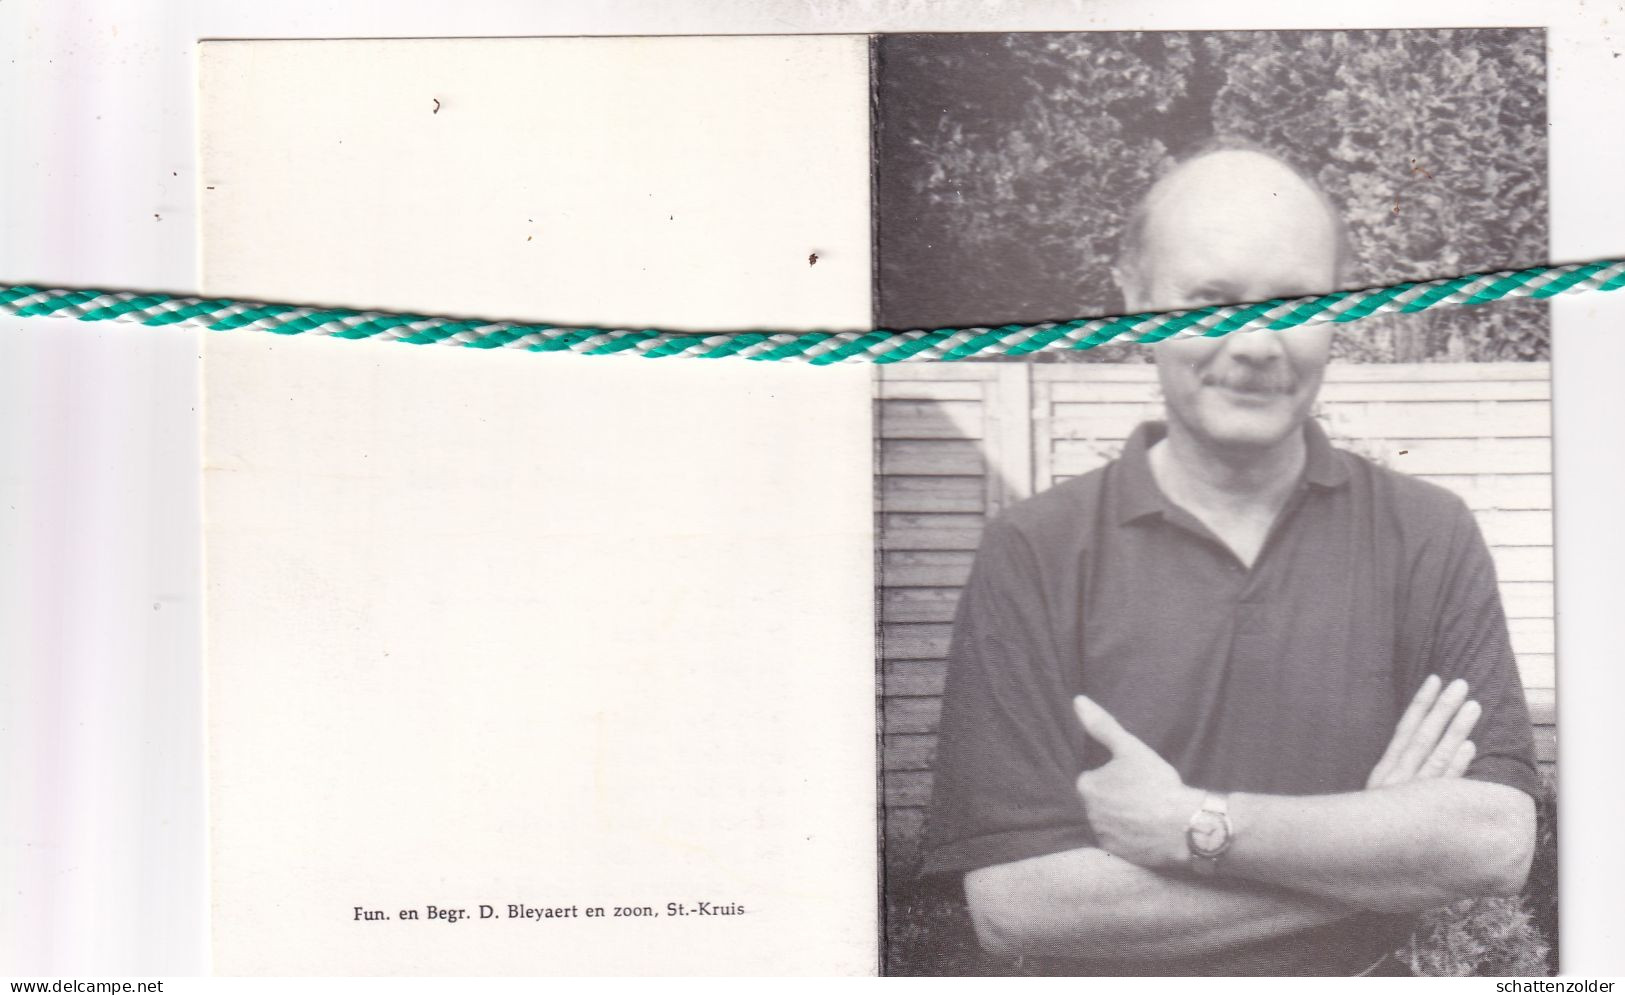 Jan Van Den Berge-Demol, Bondo (Kongo) 1942, Brugge 1992. Foto - Obituary Notices